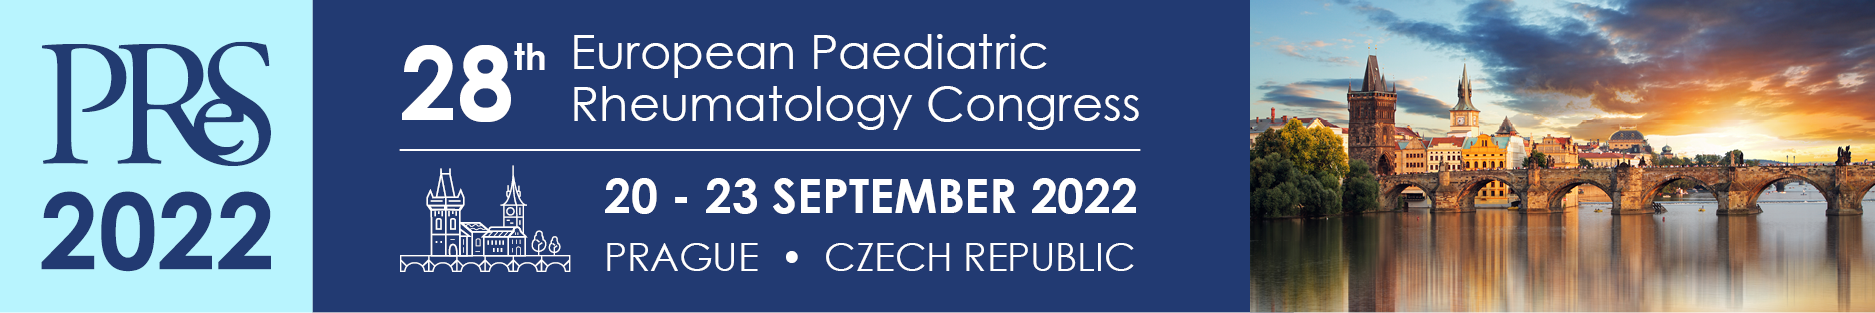 28th European Paediatric Rheumatology Congress